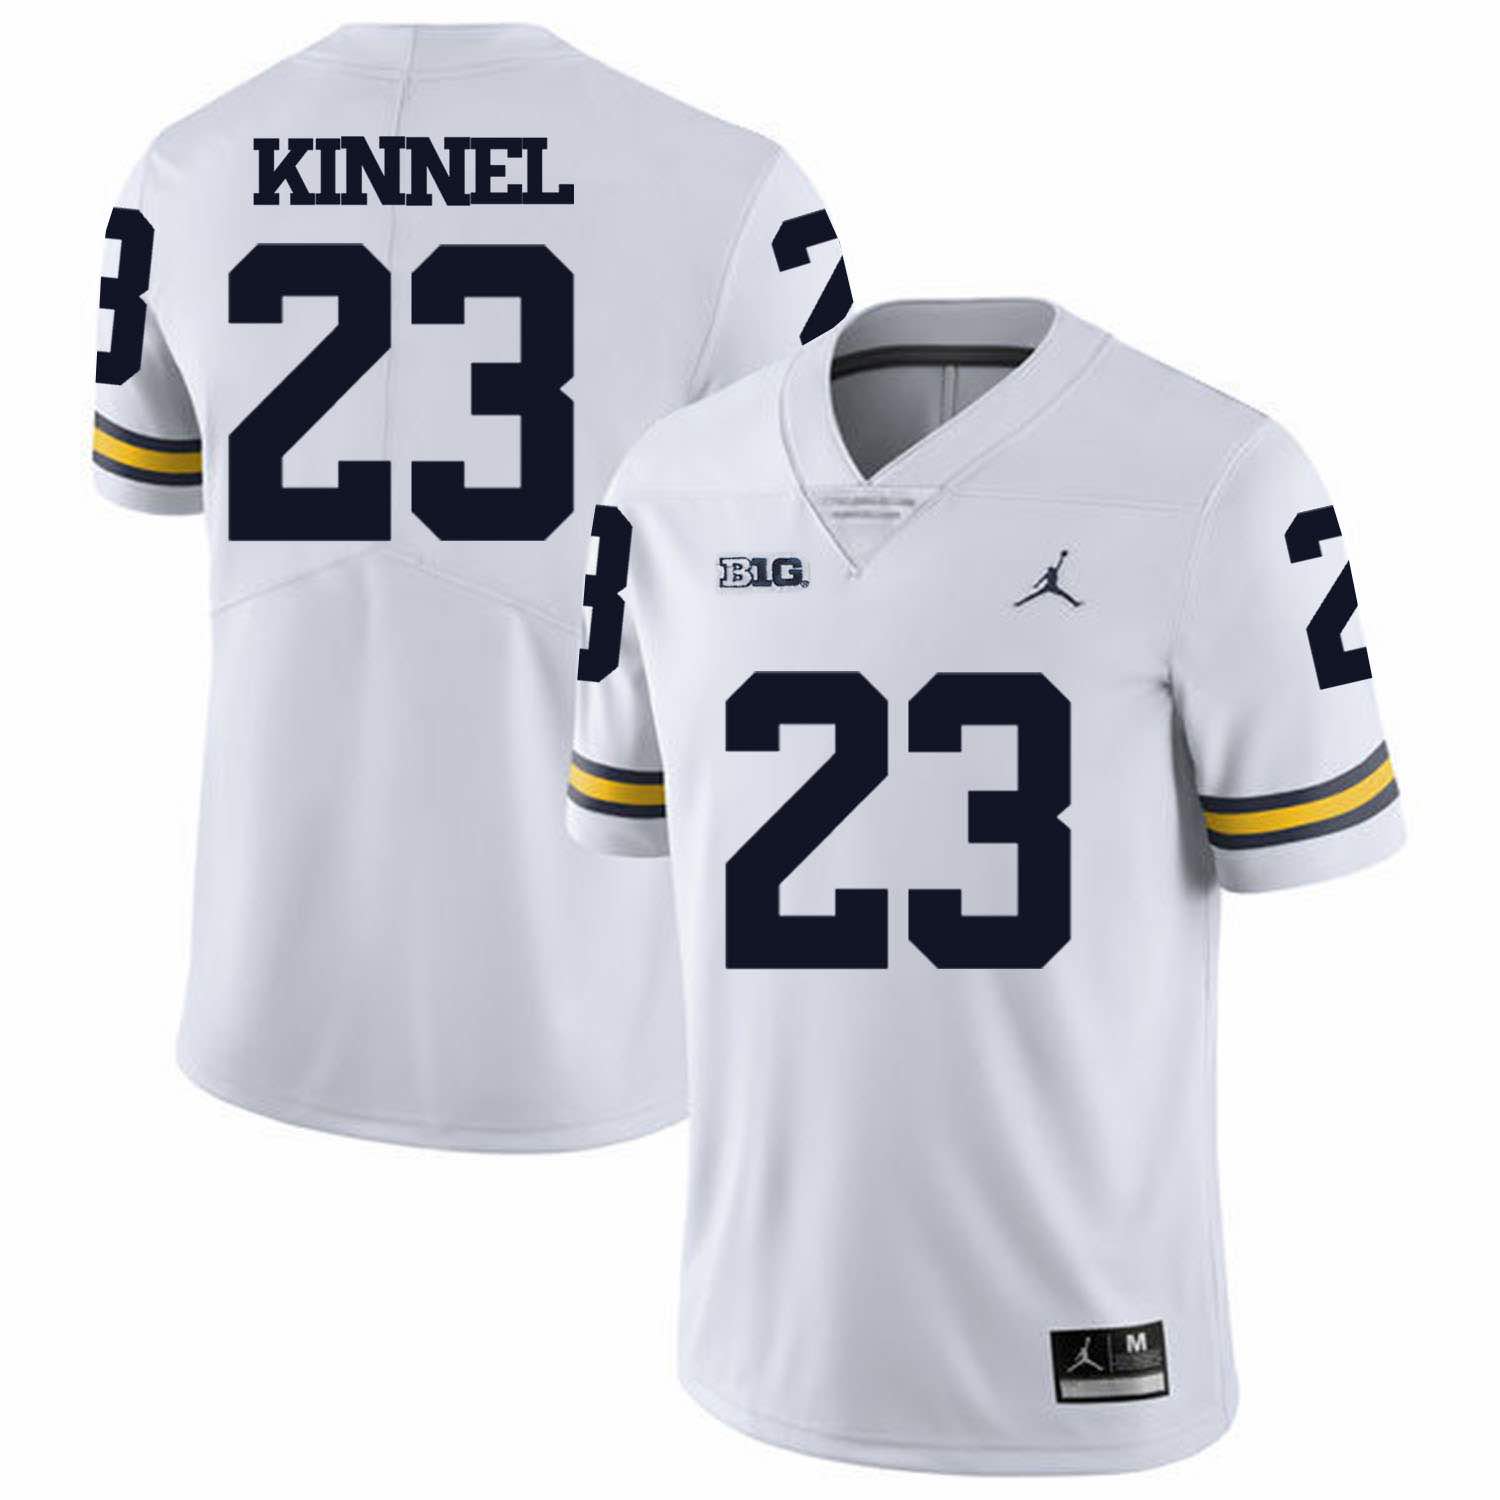 NCAA Michigan Wolverines #23 Kinnel White Football Jersey